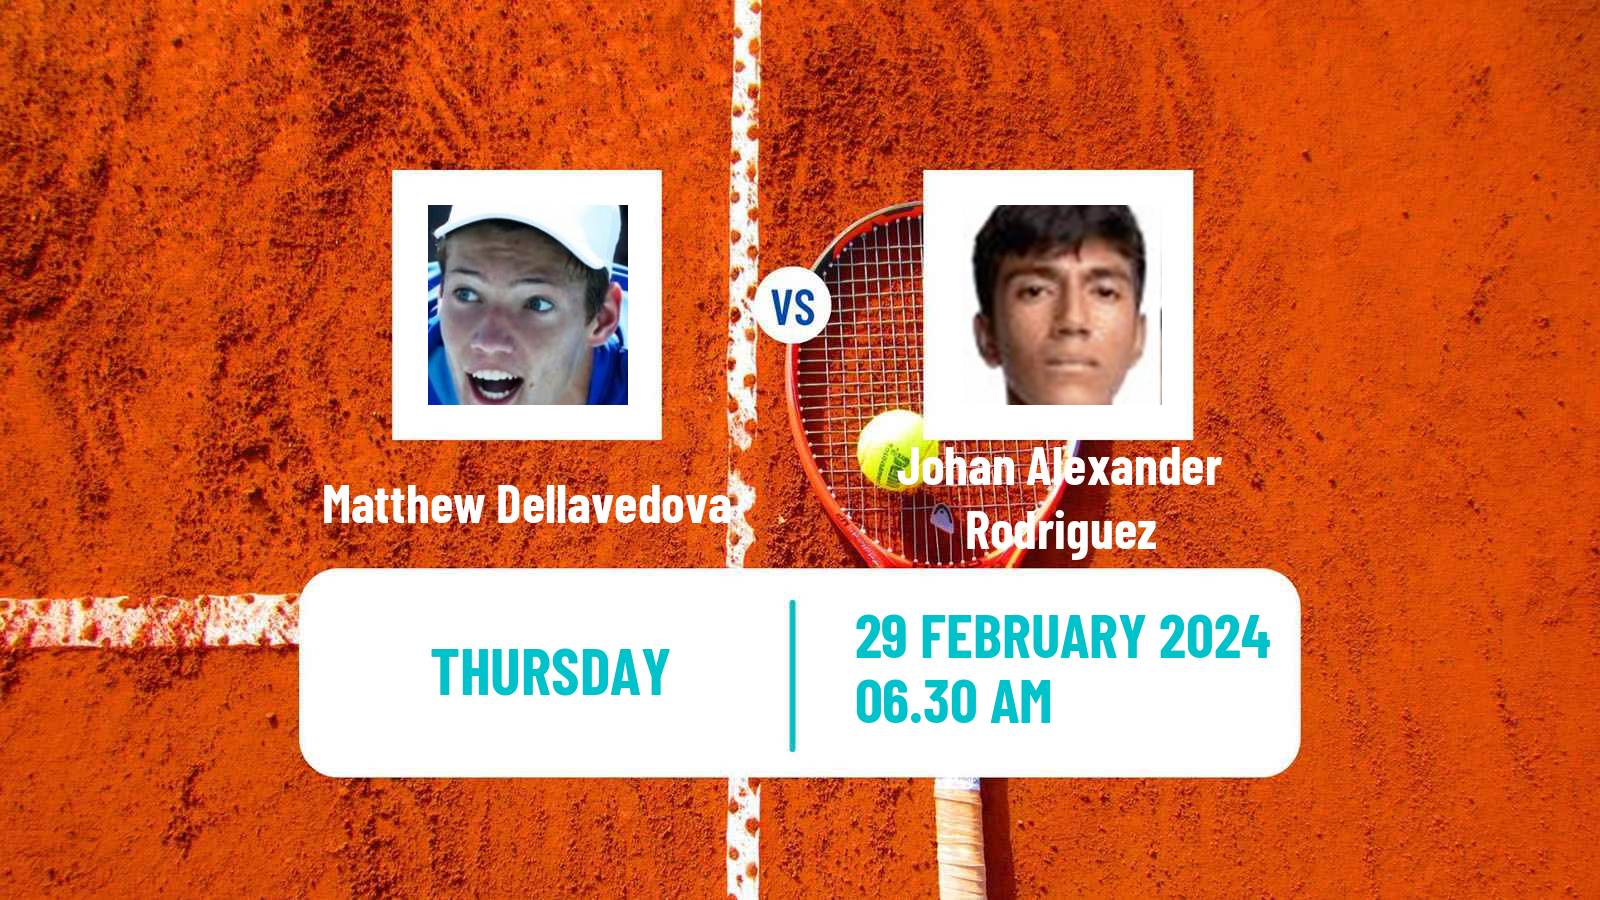 Tennis ITF M25 Faro Men Matthew Dellavedova - Johan Alexander Rodriguez